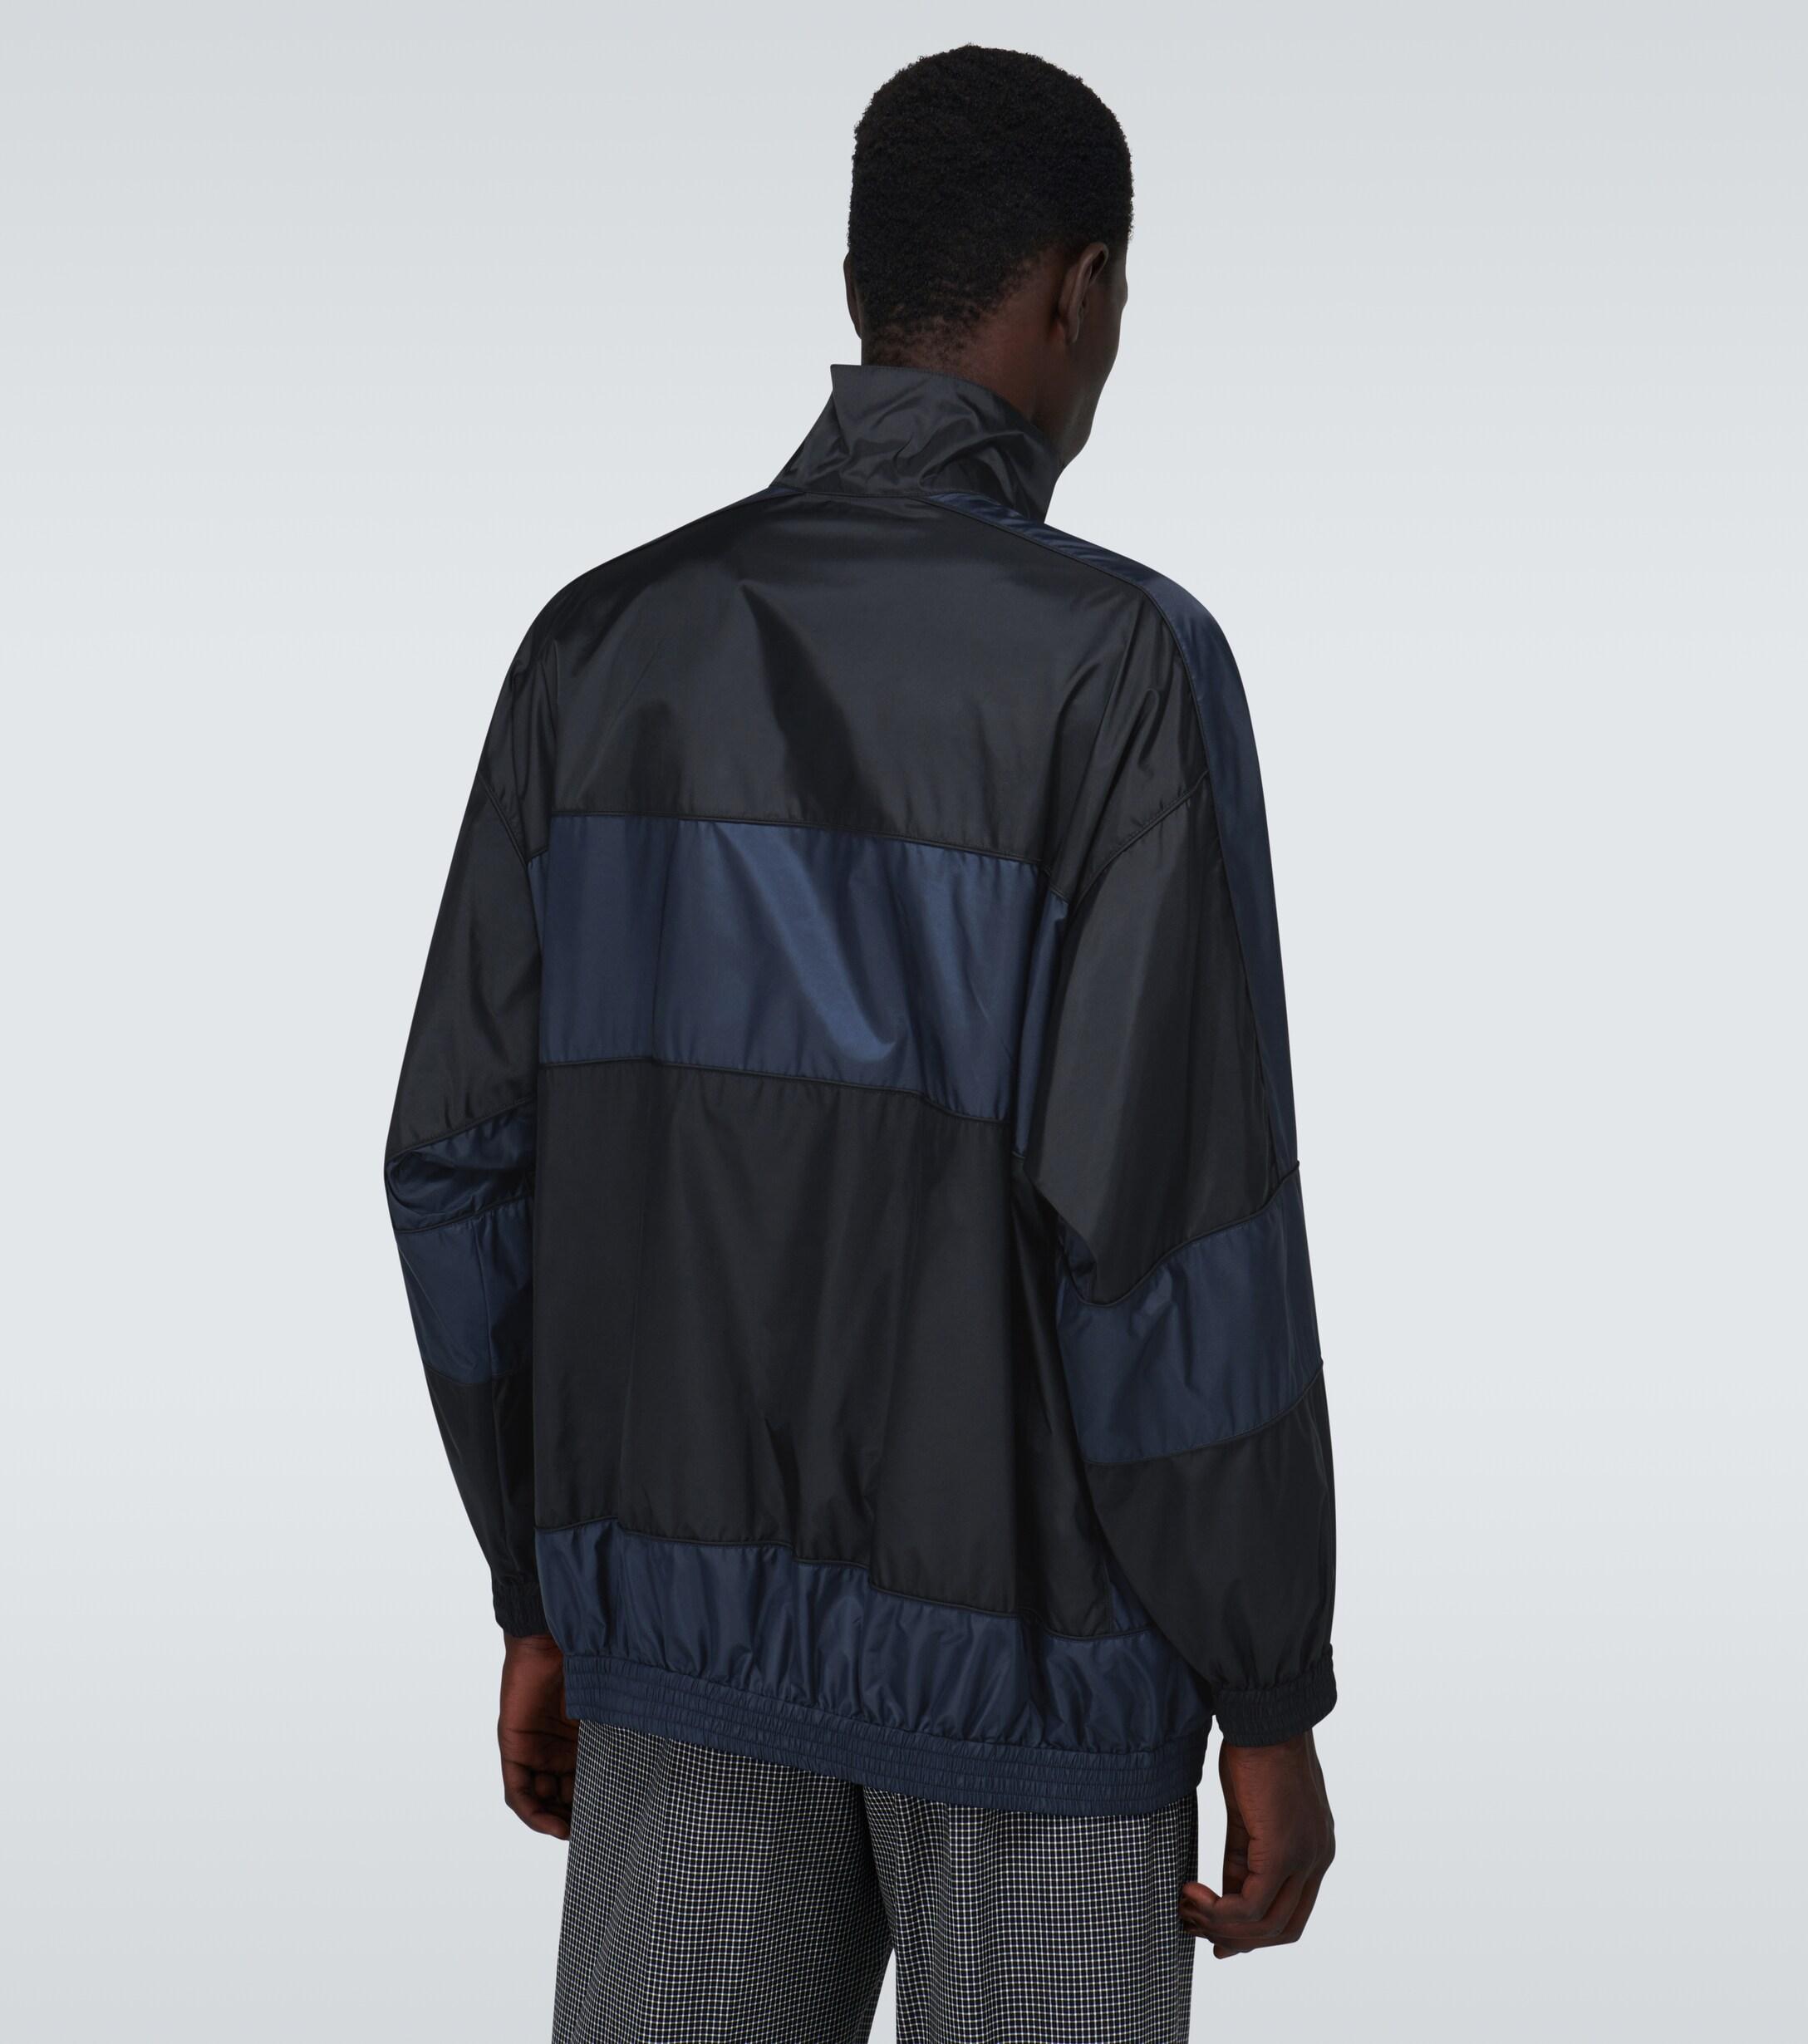 Balenciaga Nylon Track Jacket in Blue for Men - Lyst